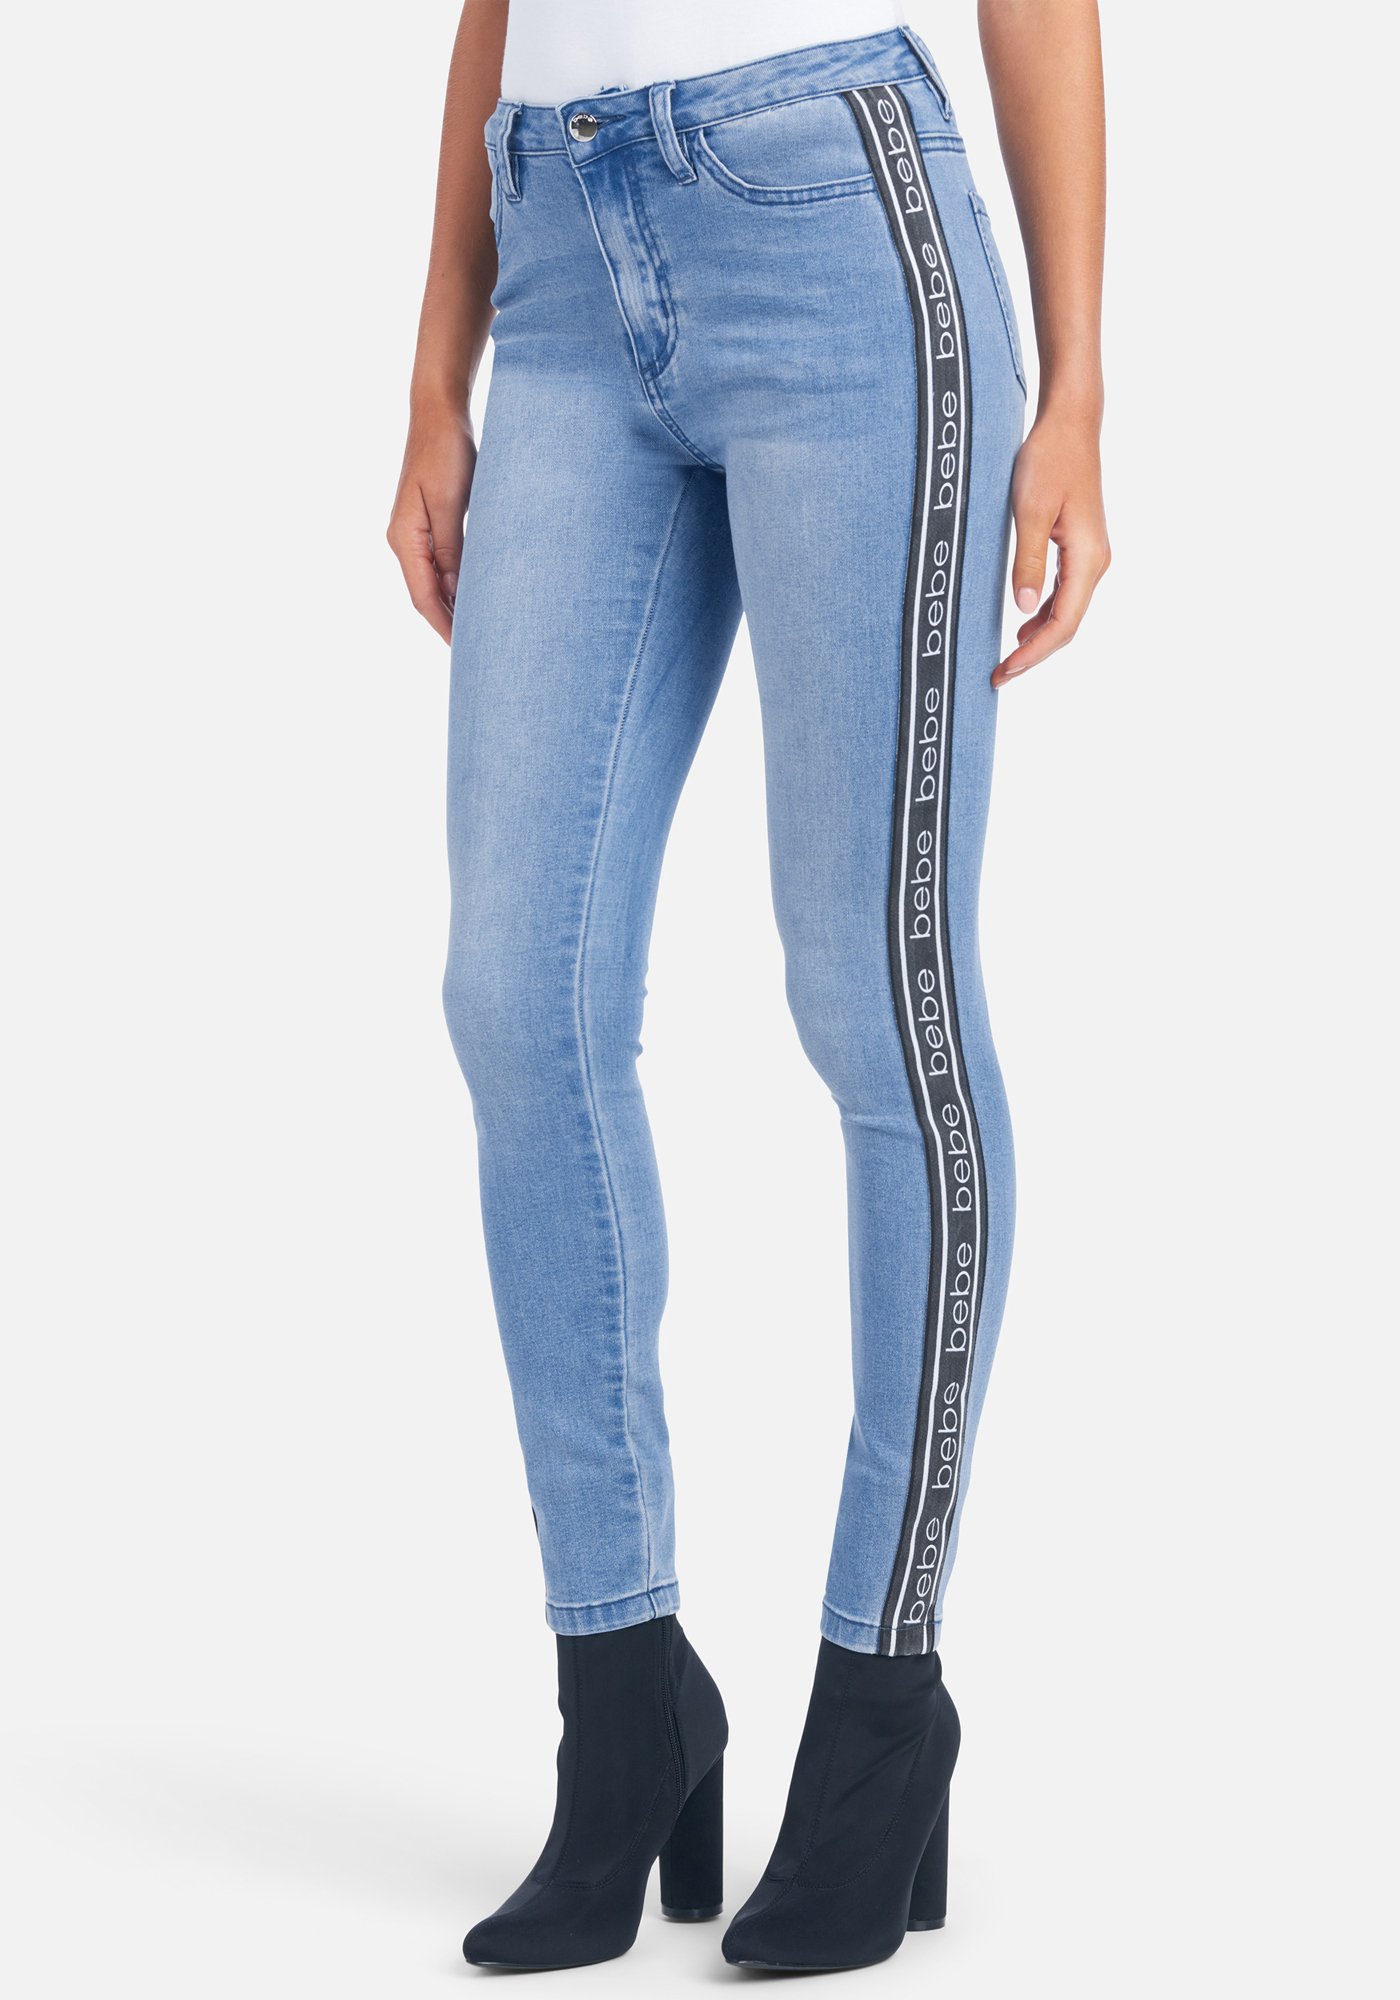 Women's Bebe Logo Side Taping Jeans, Size 31 in Medium Wash Cotton/Spandex